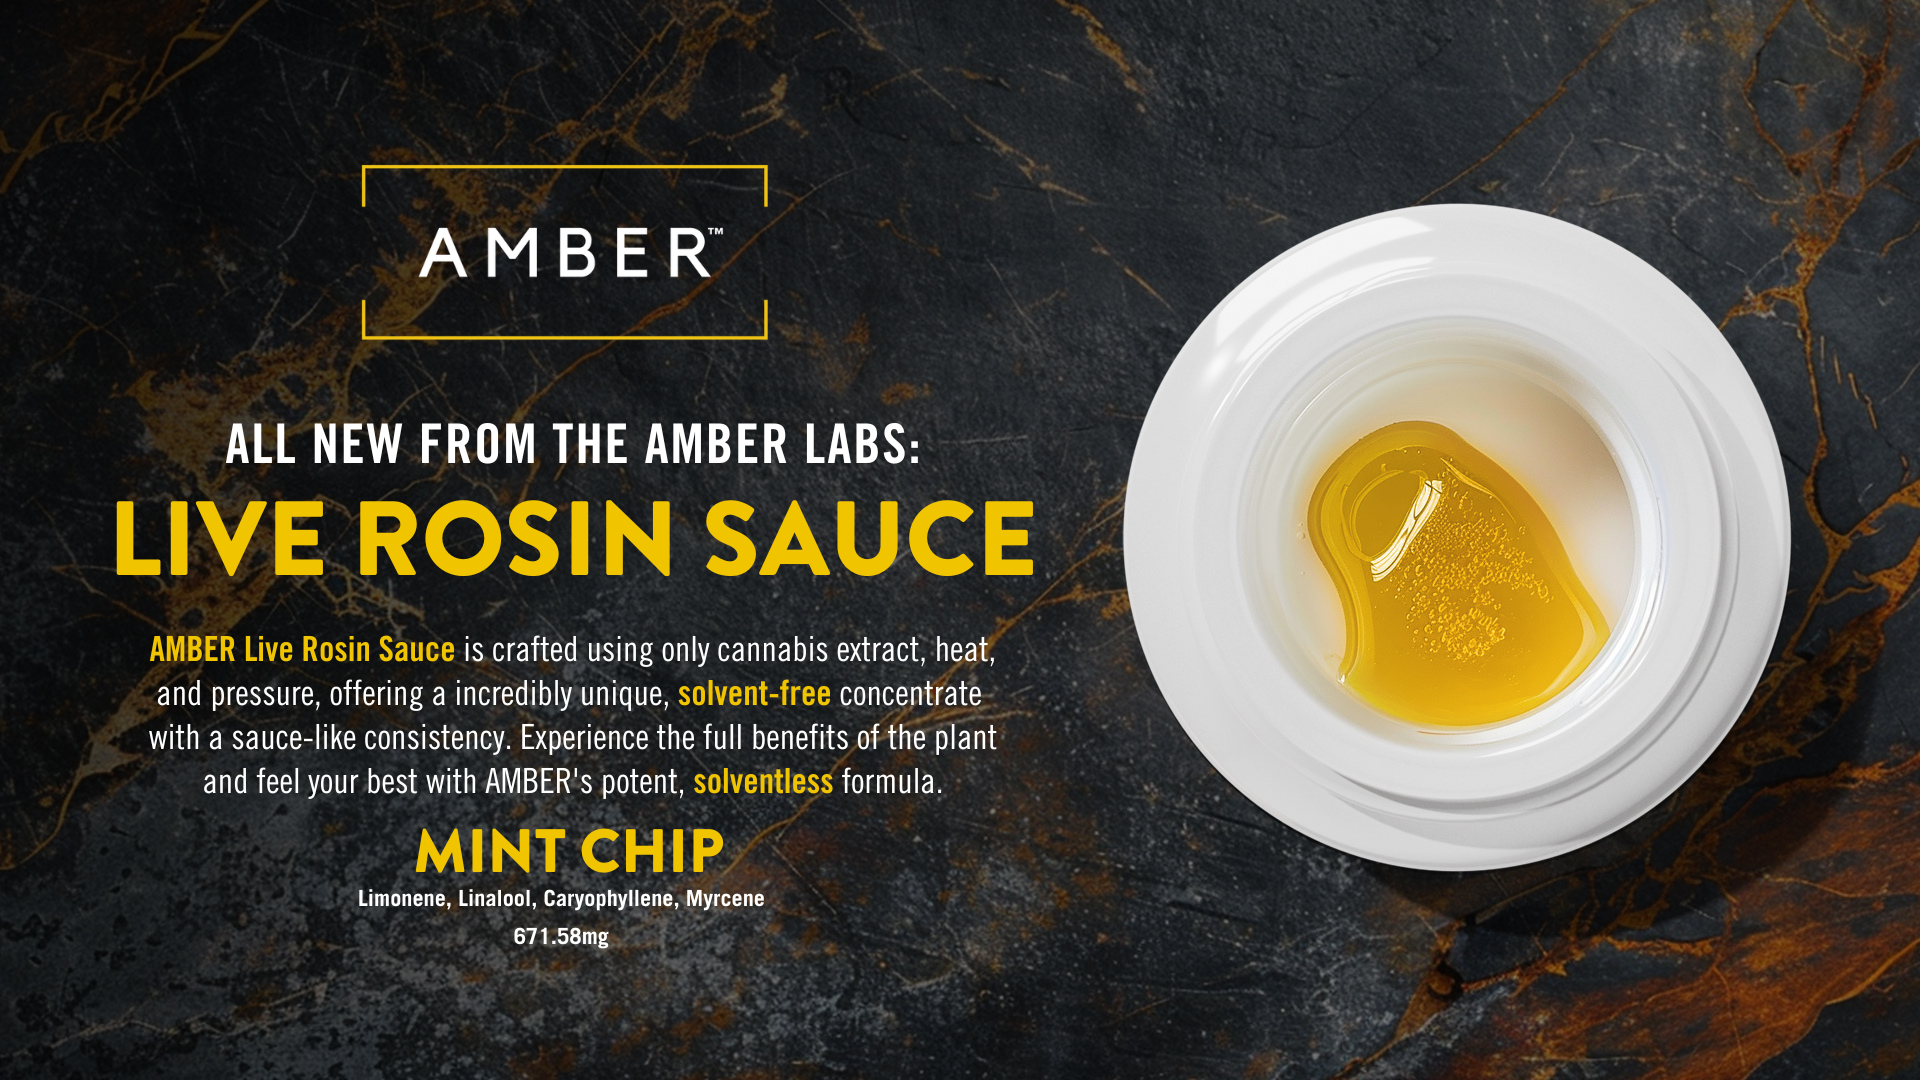 Copy of Amber Live Rosin Sauce TV 1